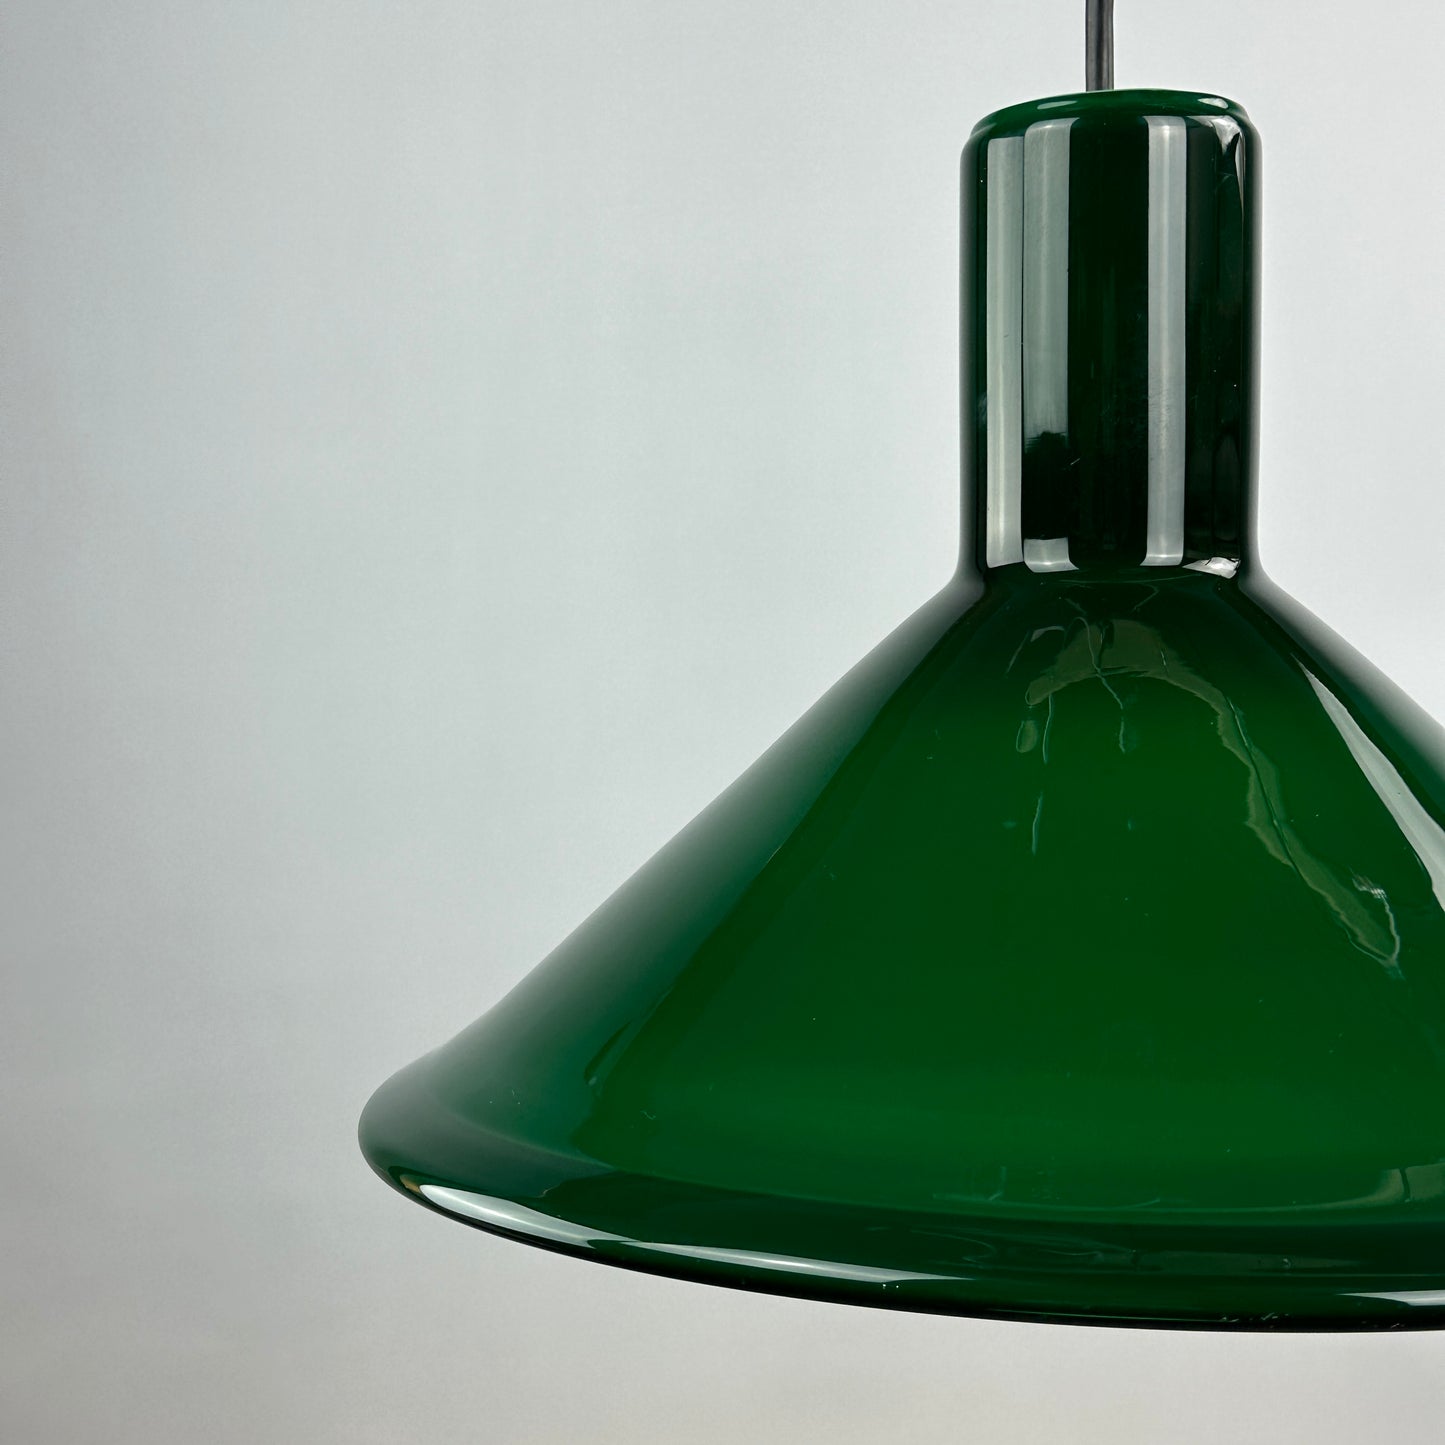 Green Danish glass pendant light Model P & T by Michael Bang for Holmegaard 1972